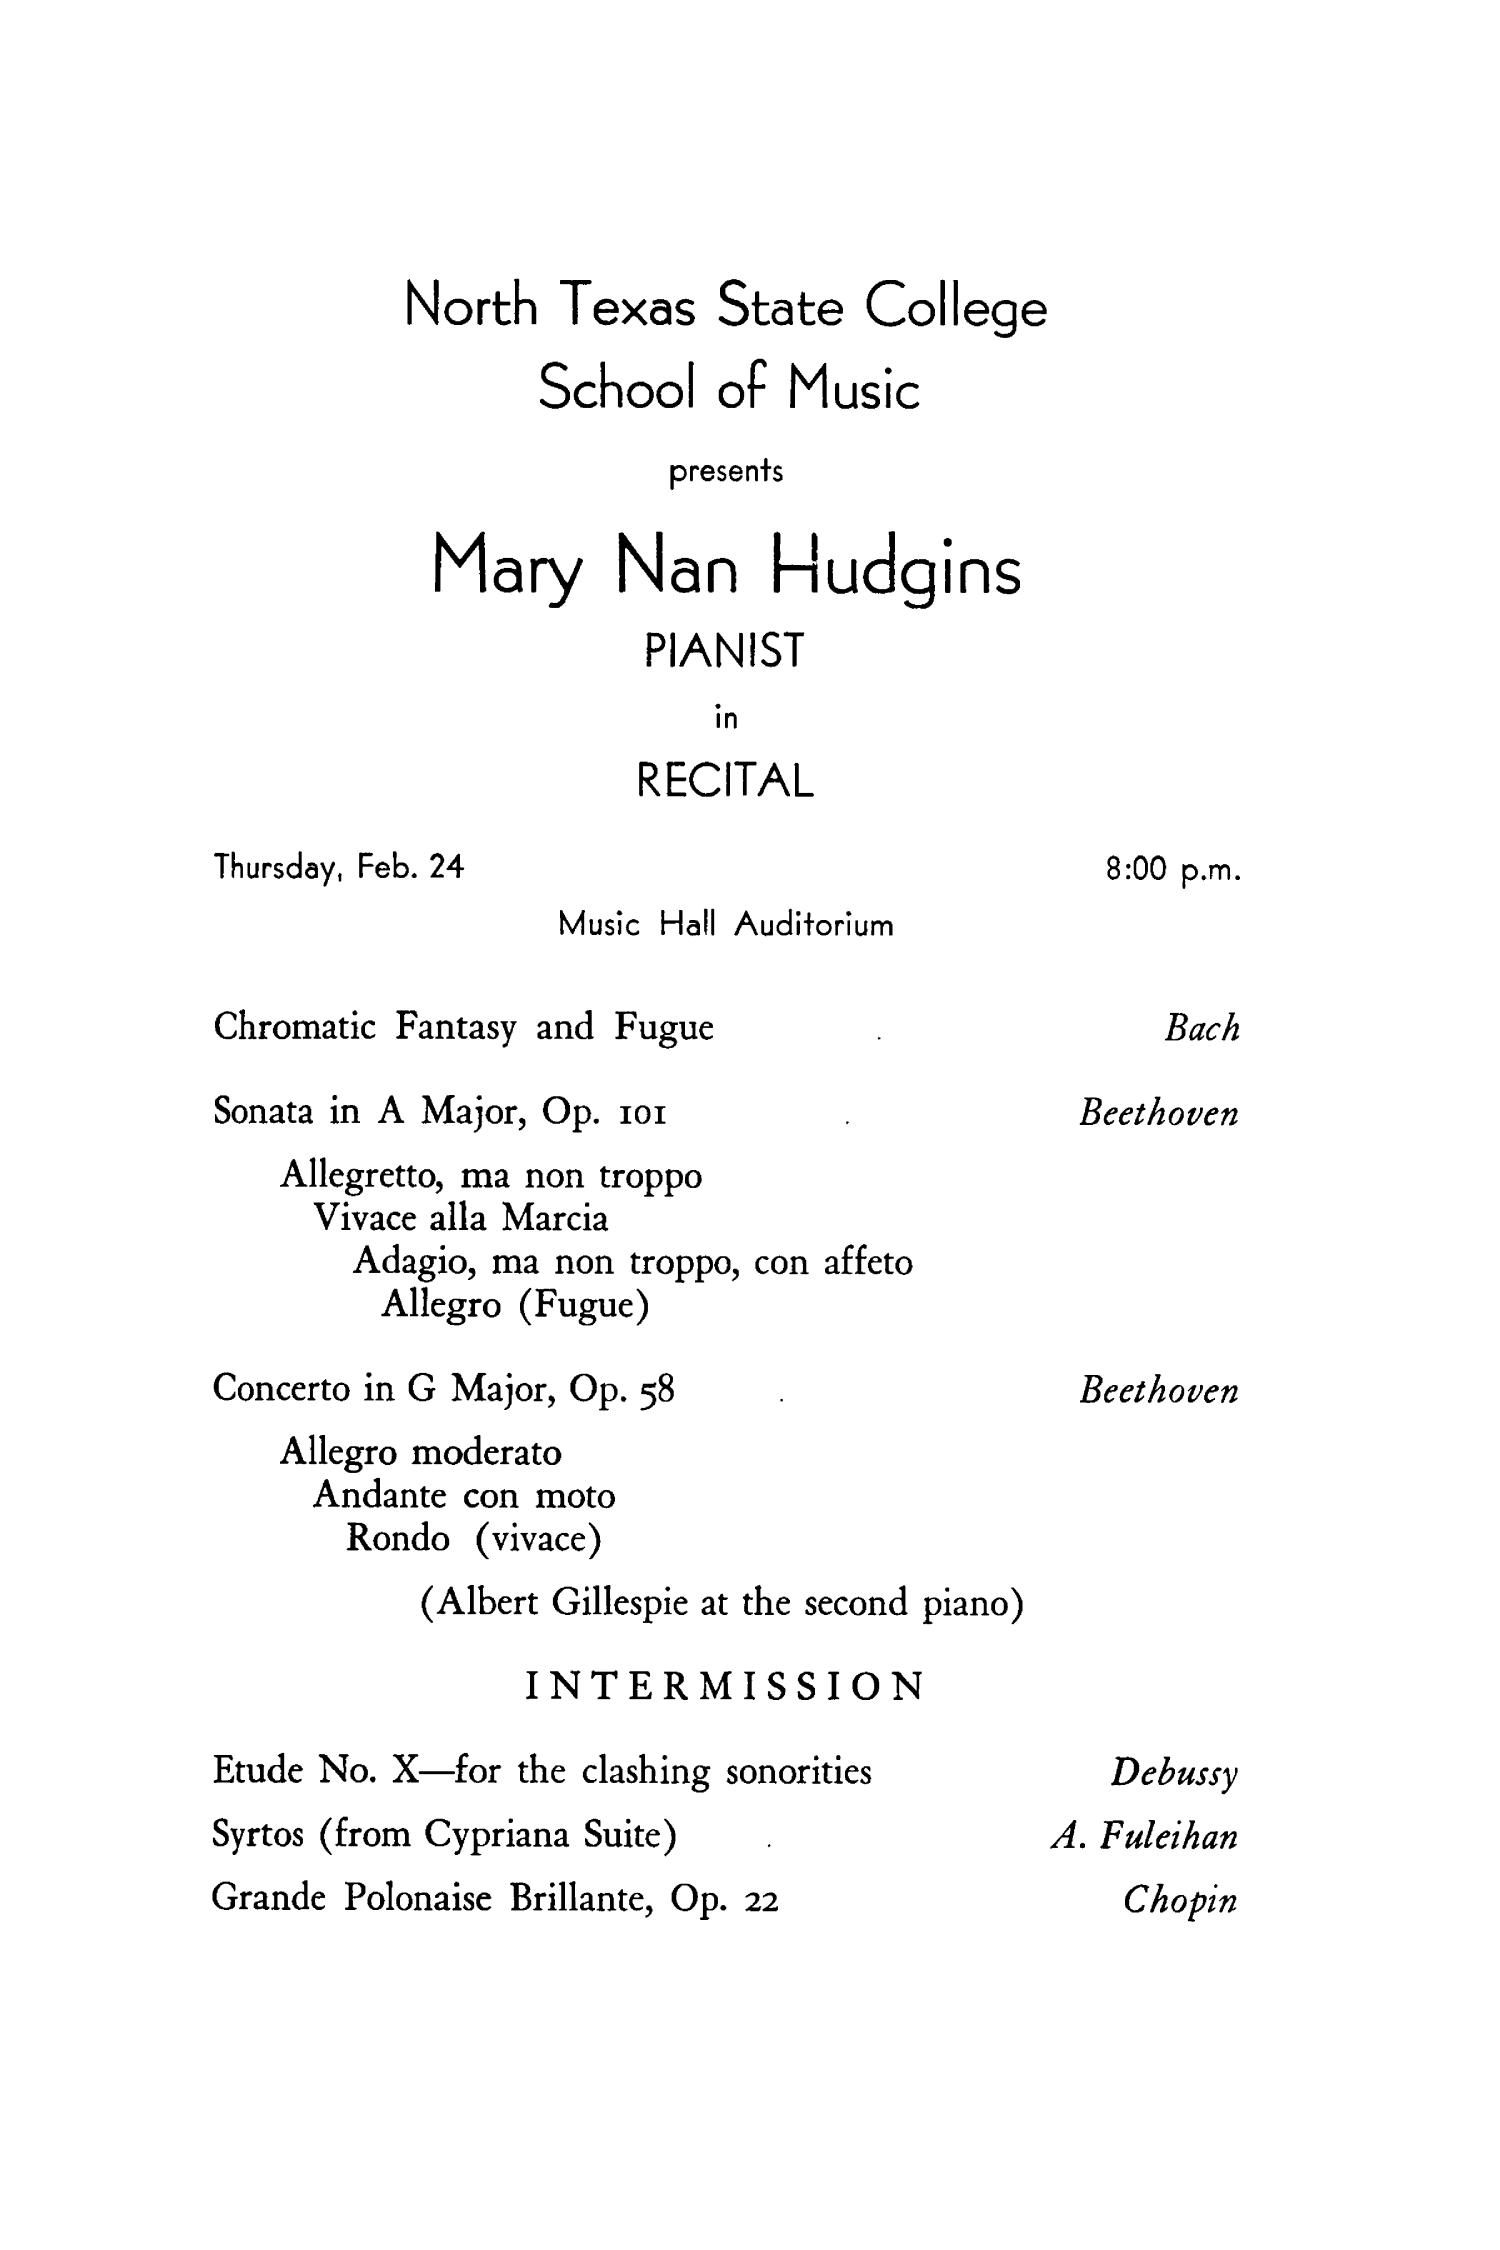 School of Music Program Book 1948-1949
                                                
                                                    65
                                                